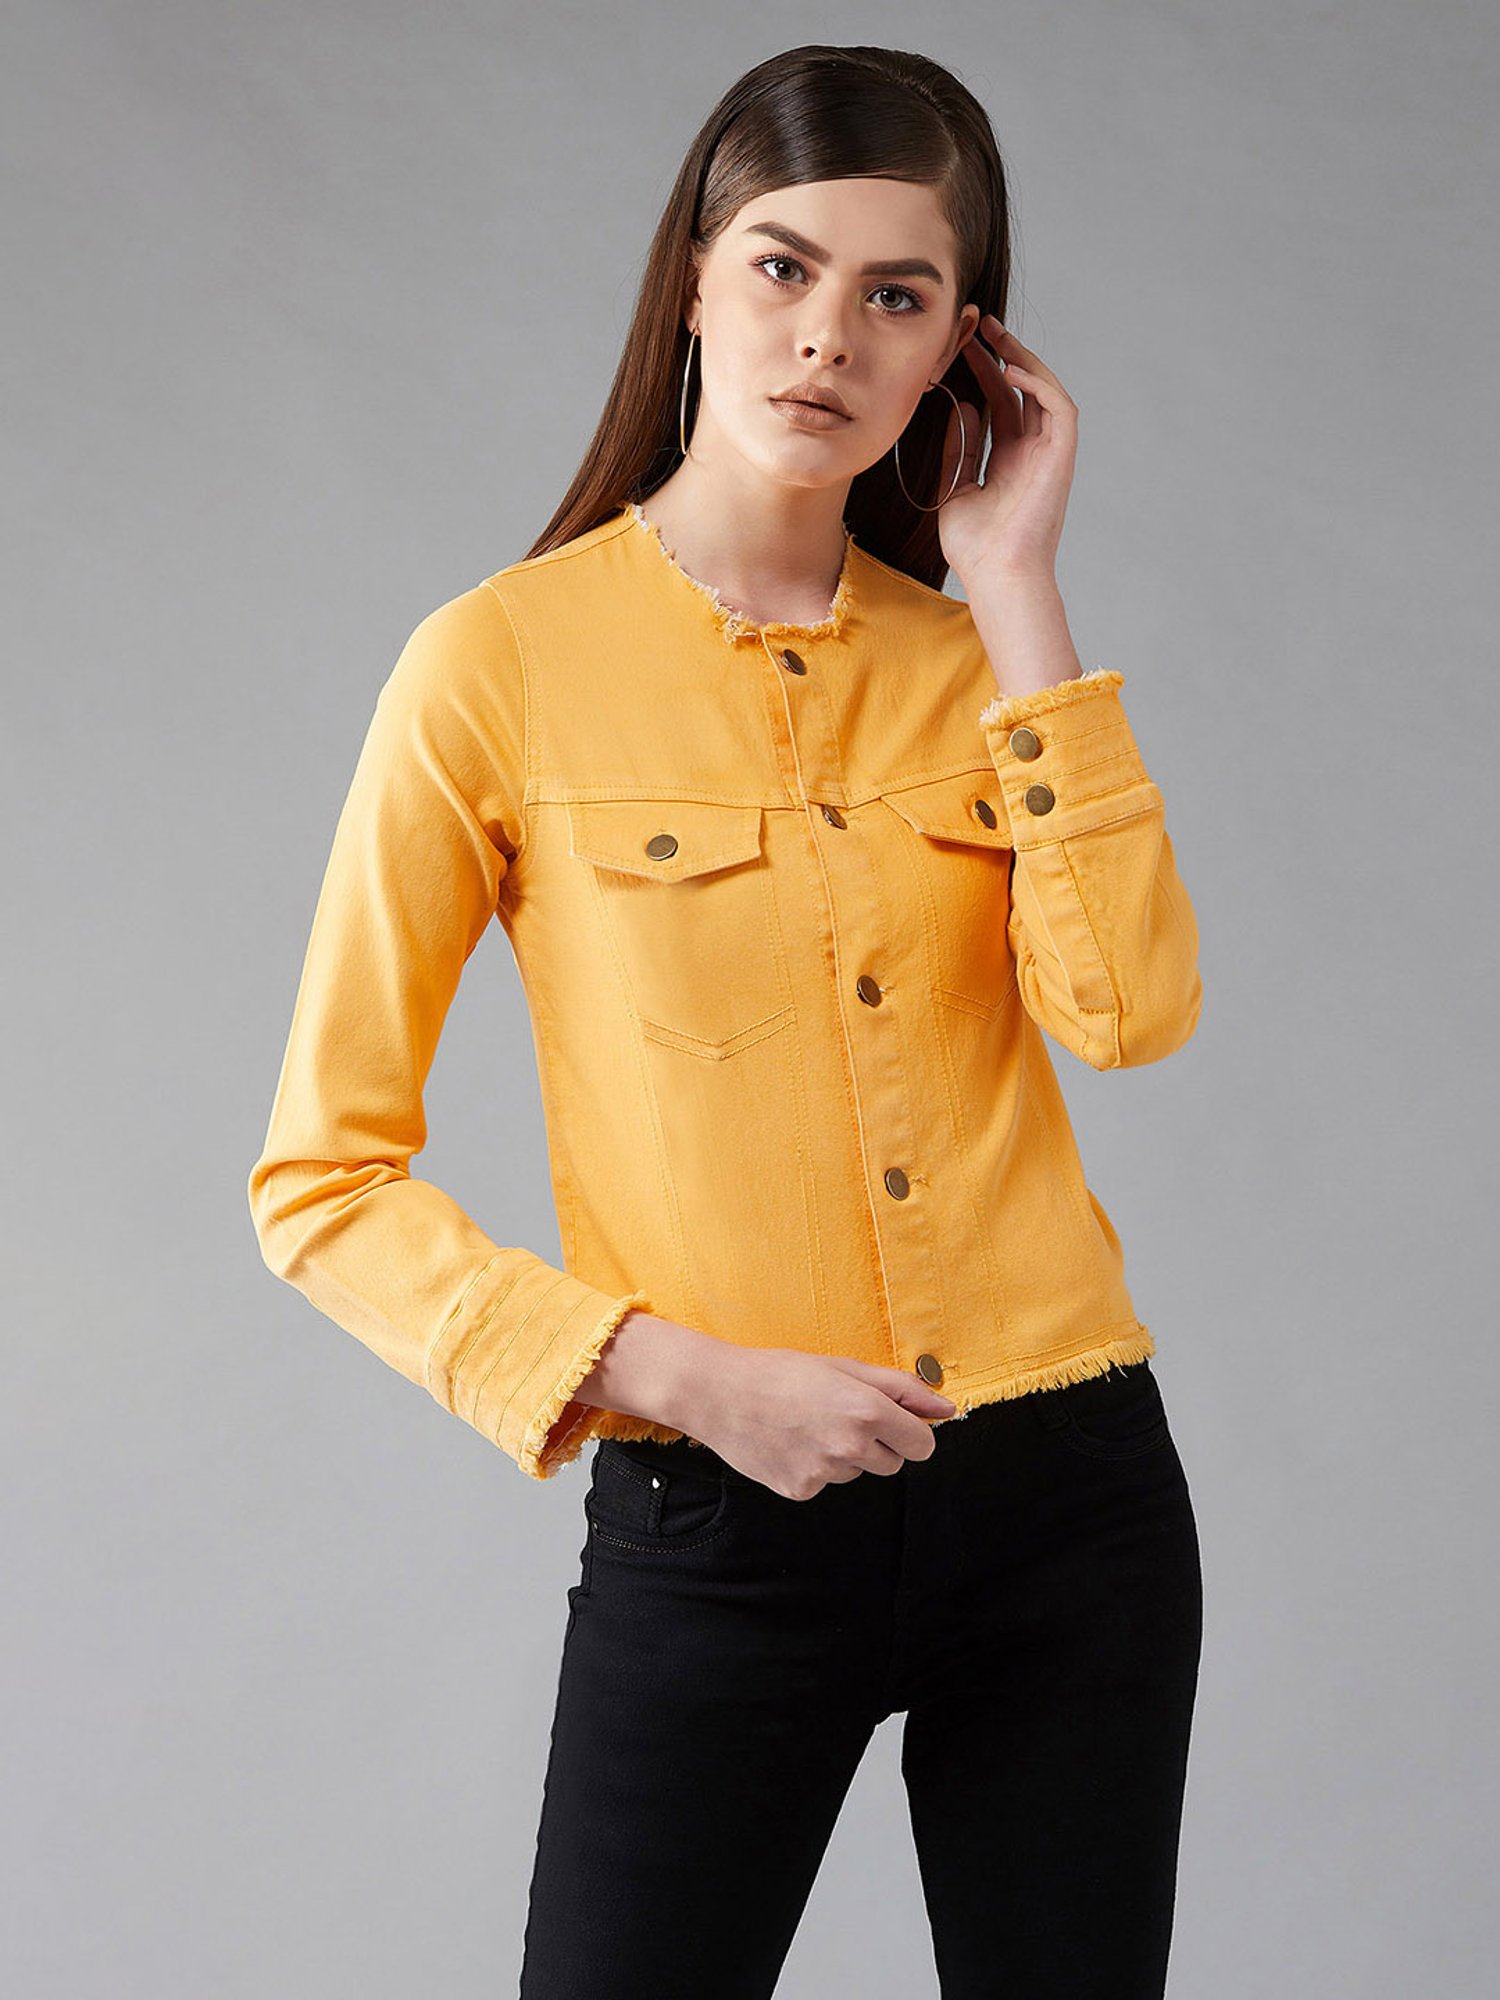 VOGATI Full Sleeve Solid Women Denim Jacket - Buy VOGATI Full Sleeve Solid  Women Denim Jacket Online at Best Prices in India | Flipkart.com